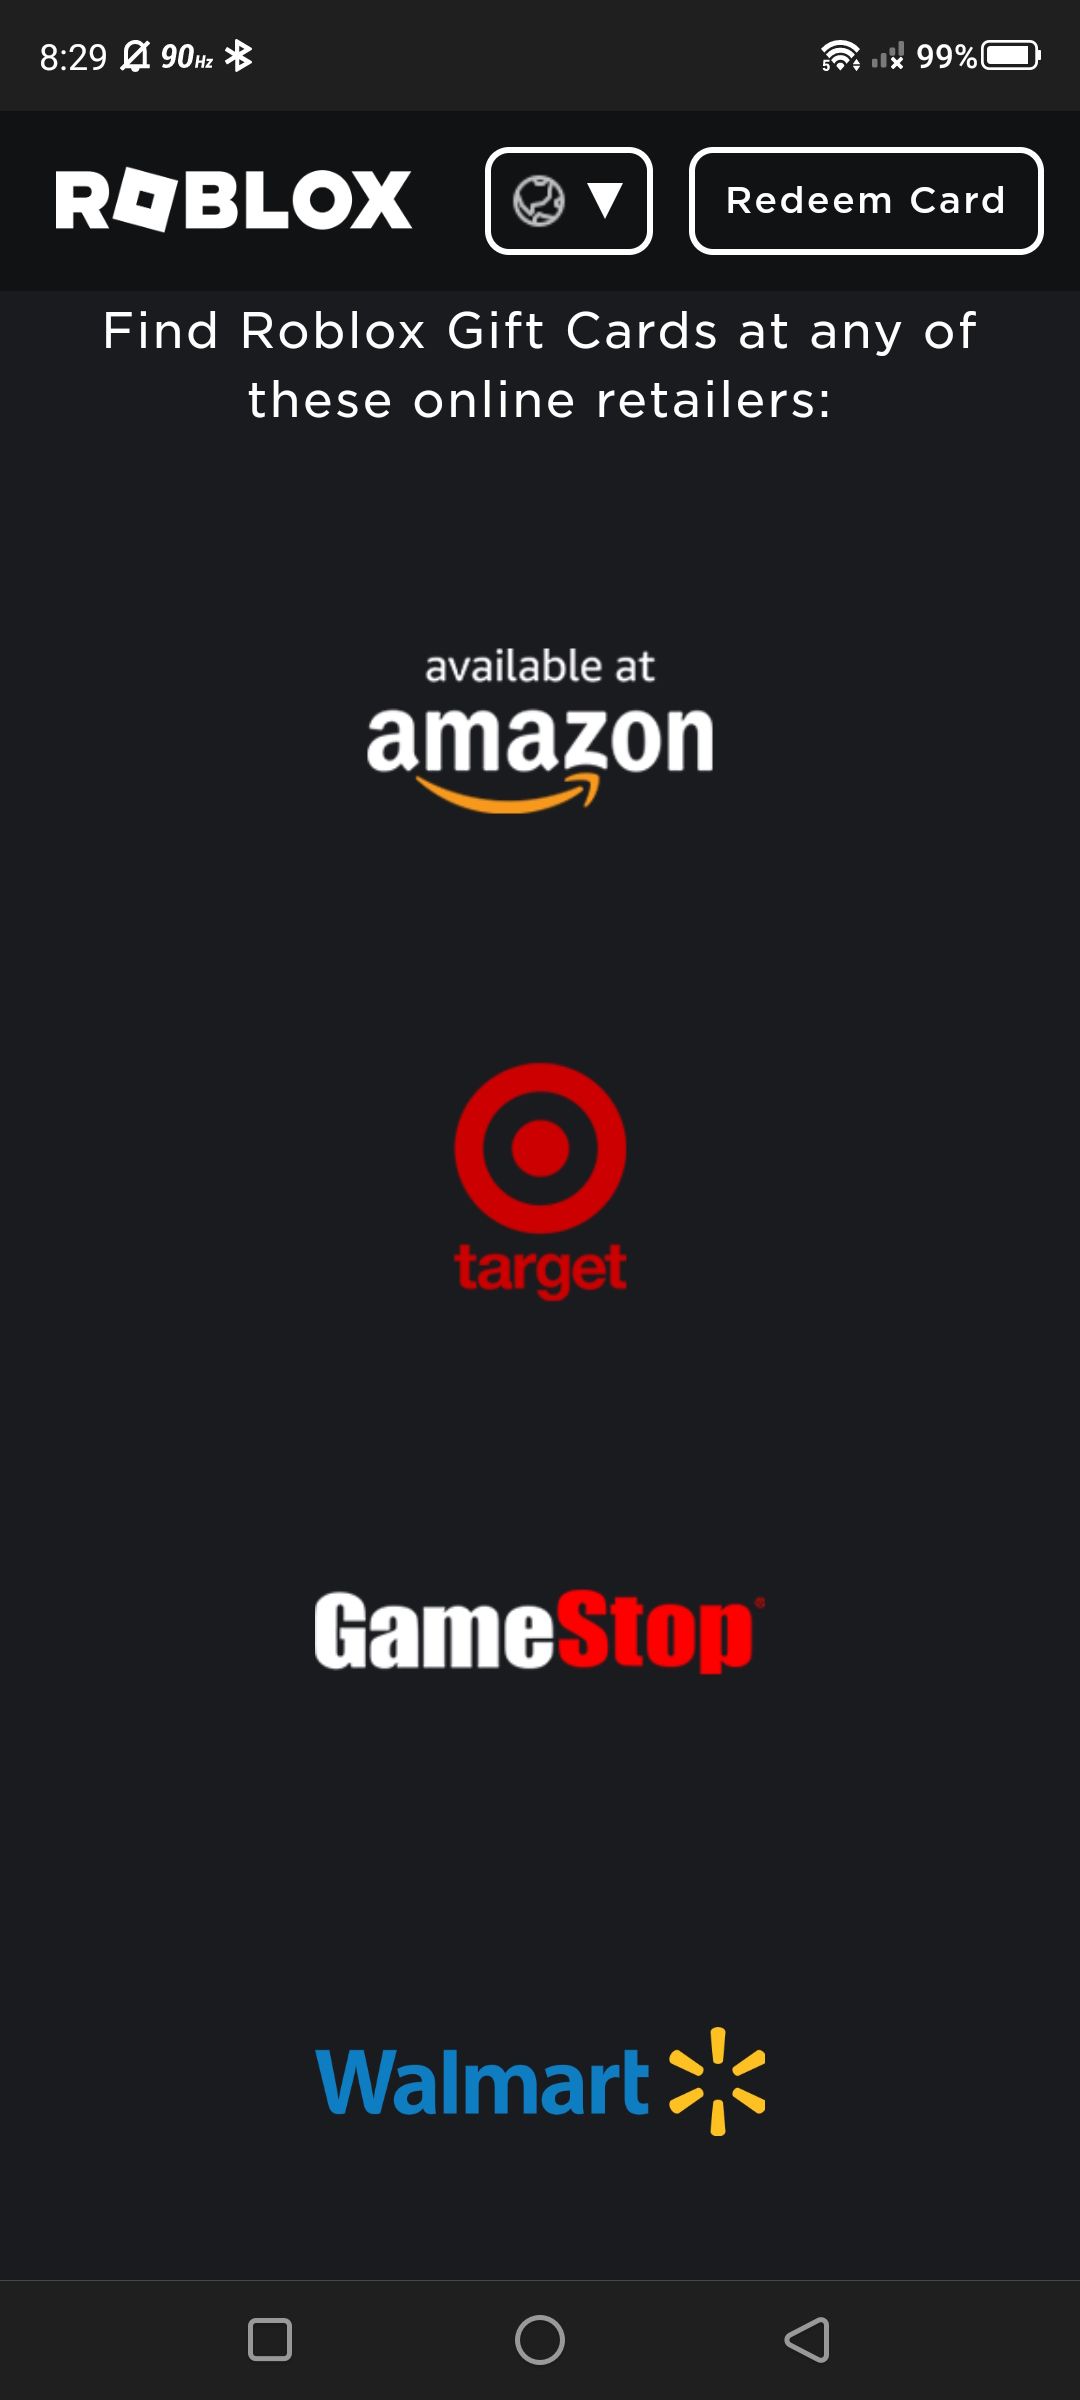 roblox retailer list for online gift card purchase showing amazon, target, gamestop, walmart